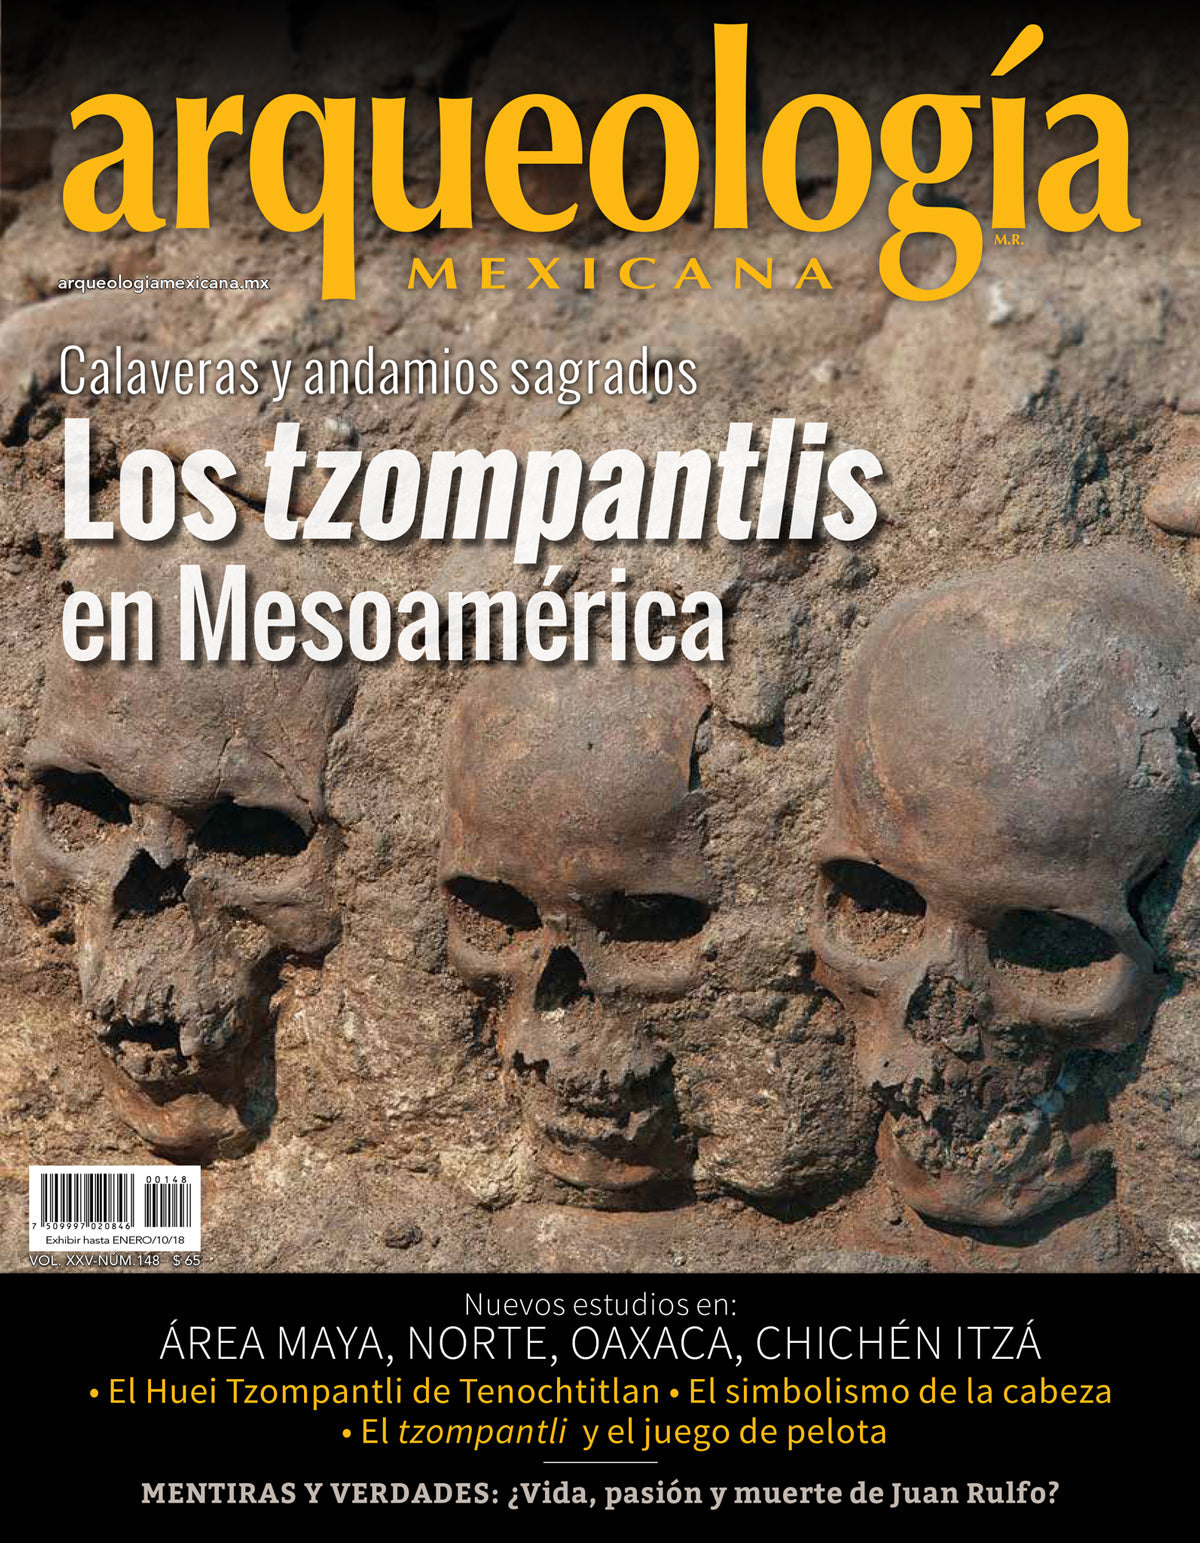 Los tzompantlis en Mesoamérica